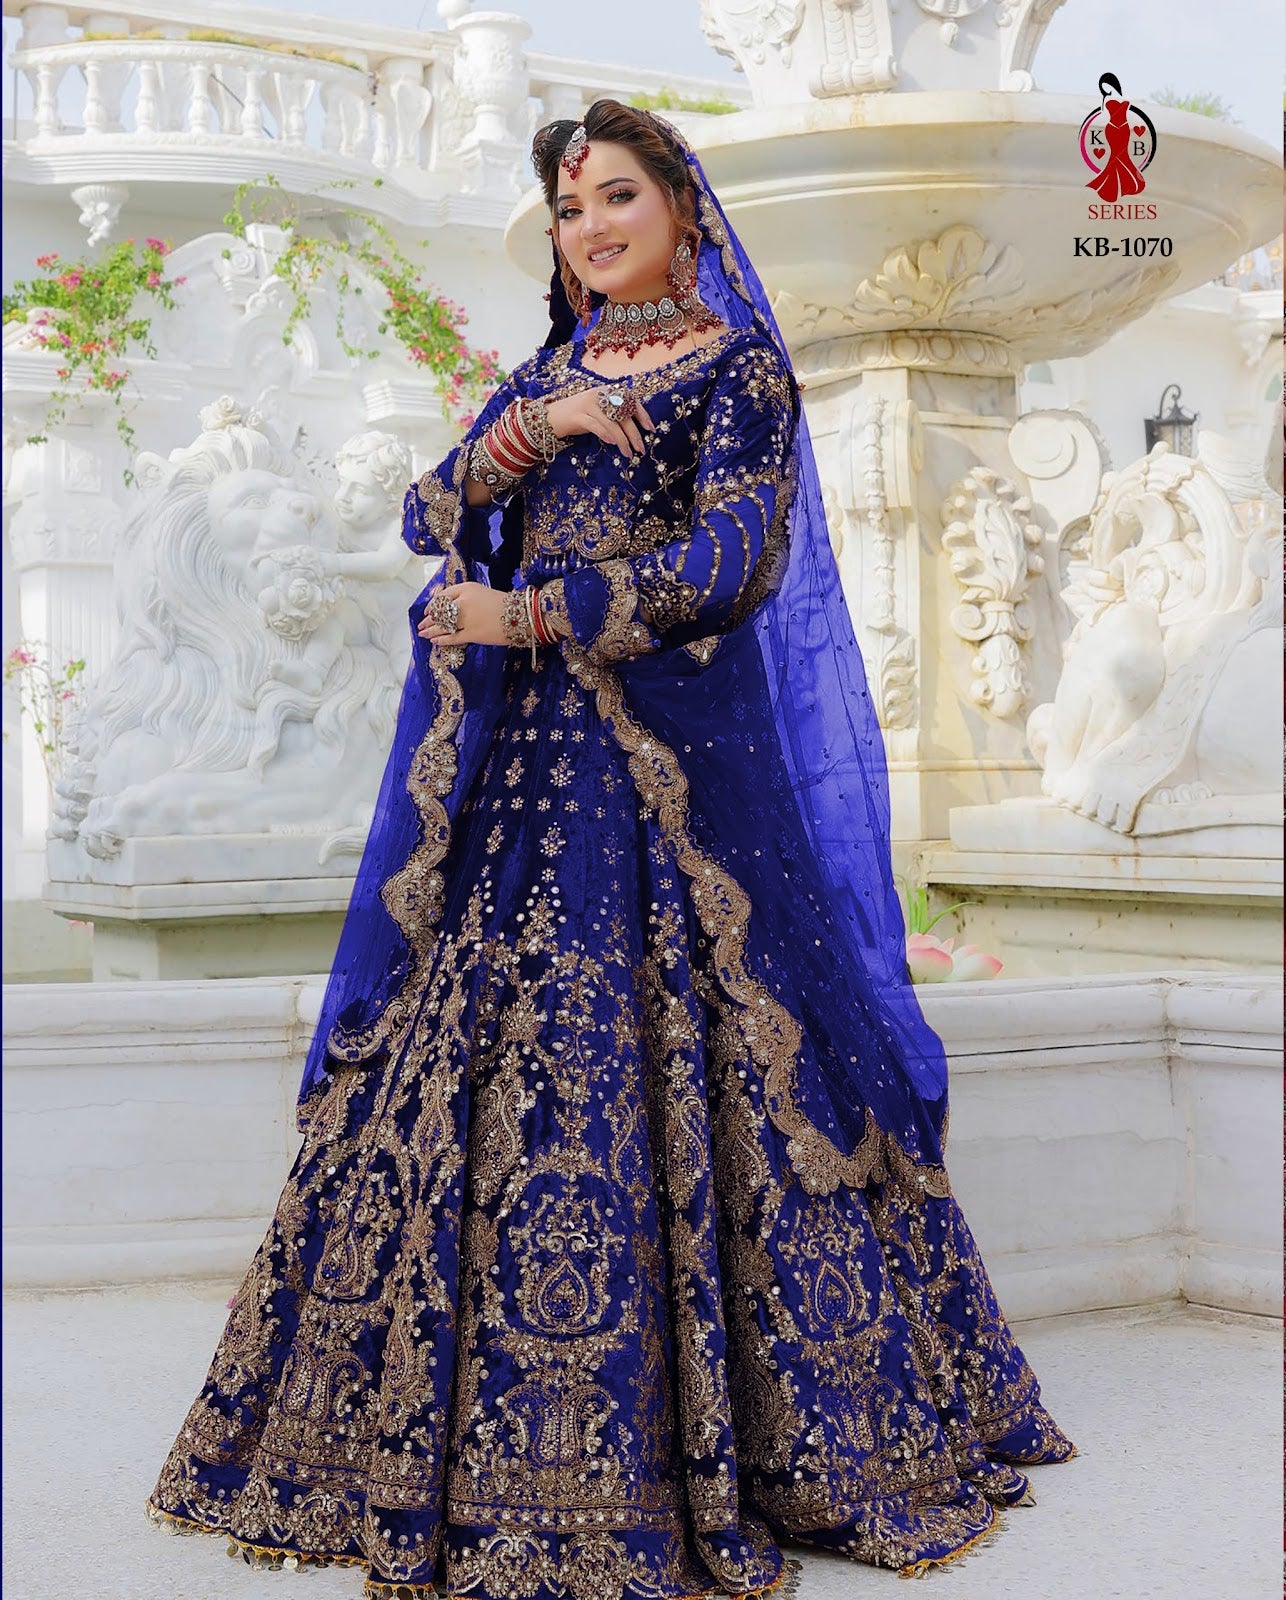 Hiba Nawab's Splendid Ethnic Outfits For Mehendi | Blouse Design